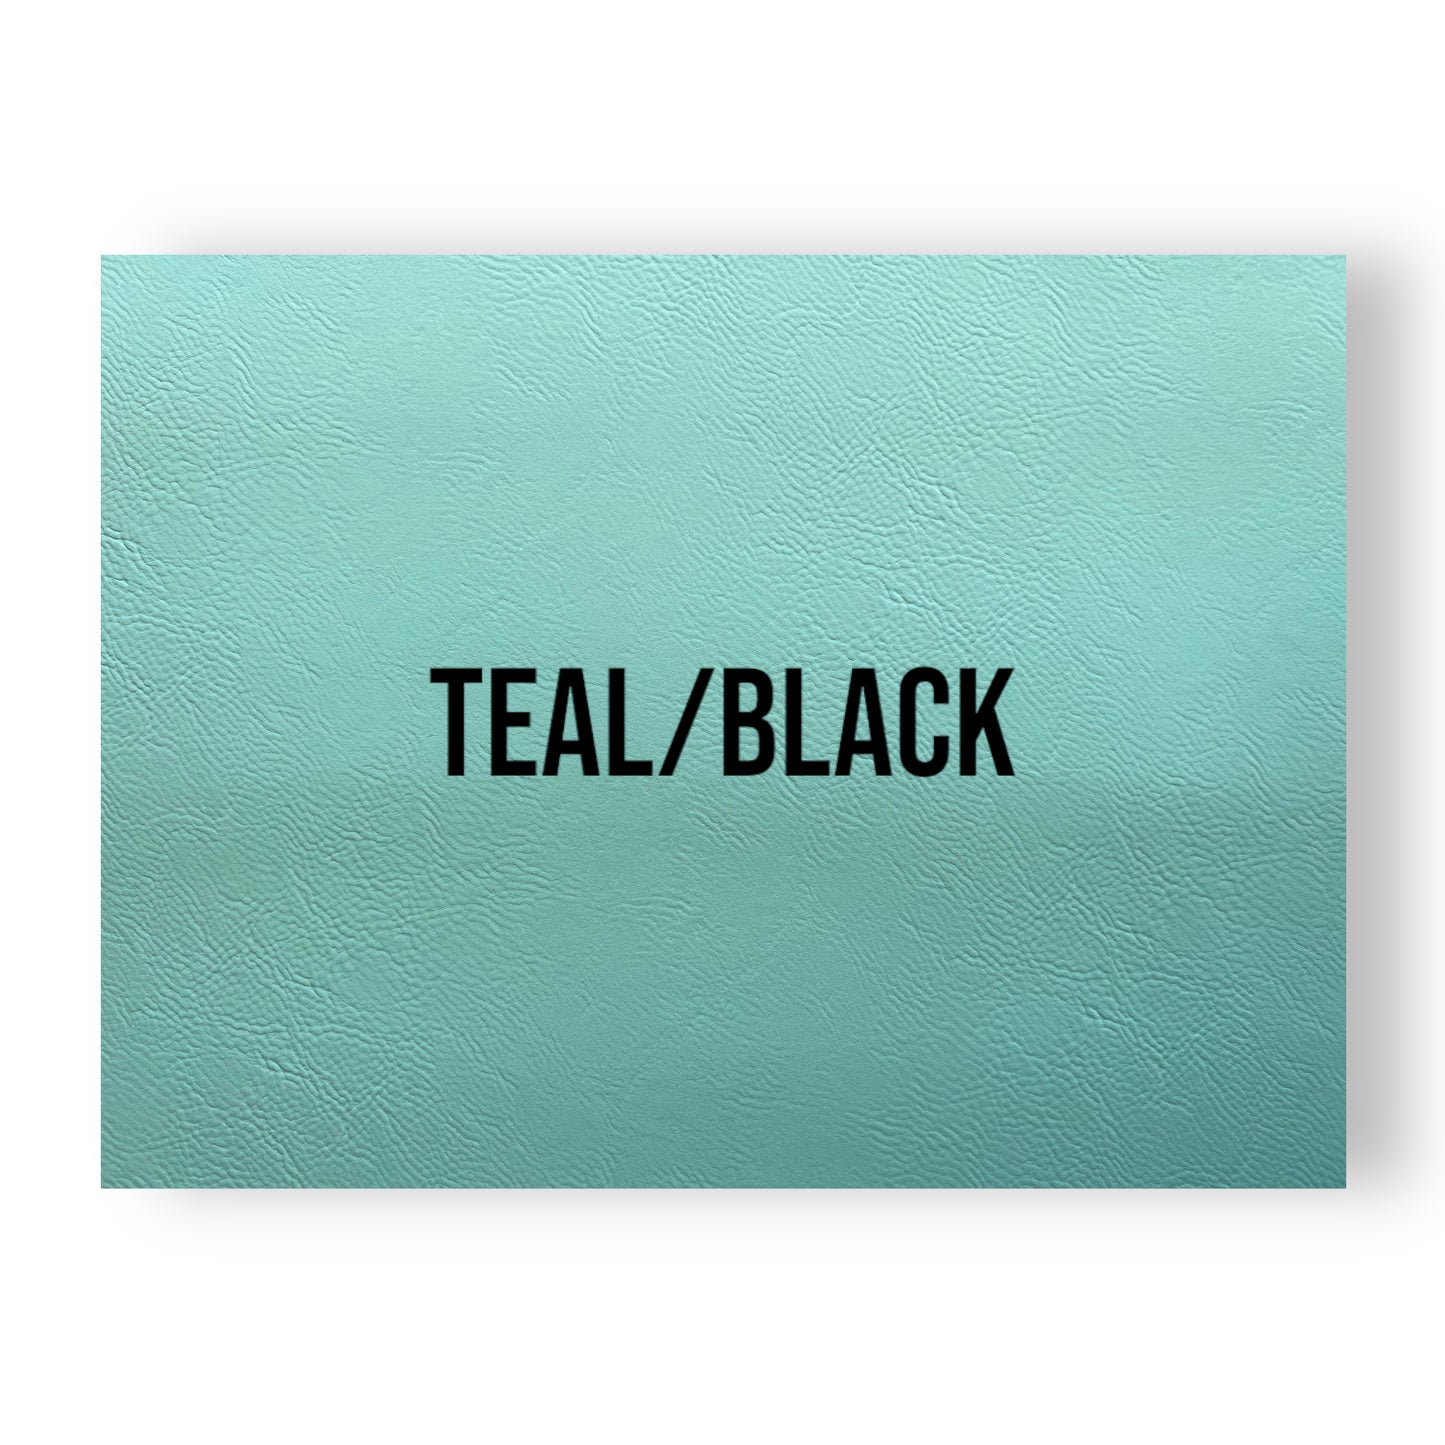 TEAL/BLACK HYDBOND LEATHERETTE SHEET (12"x24")